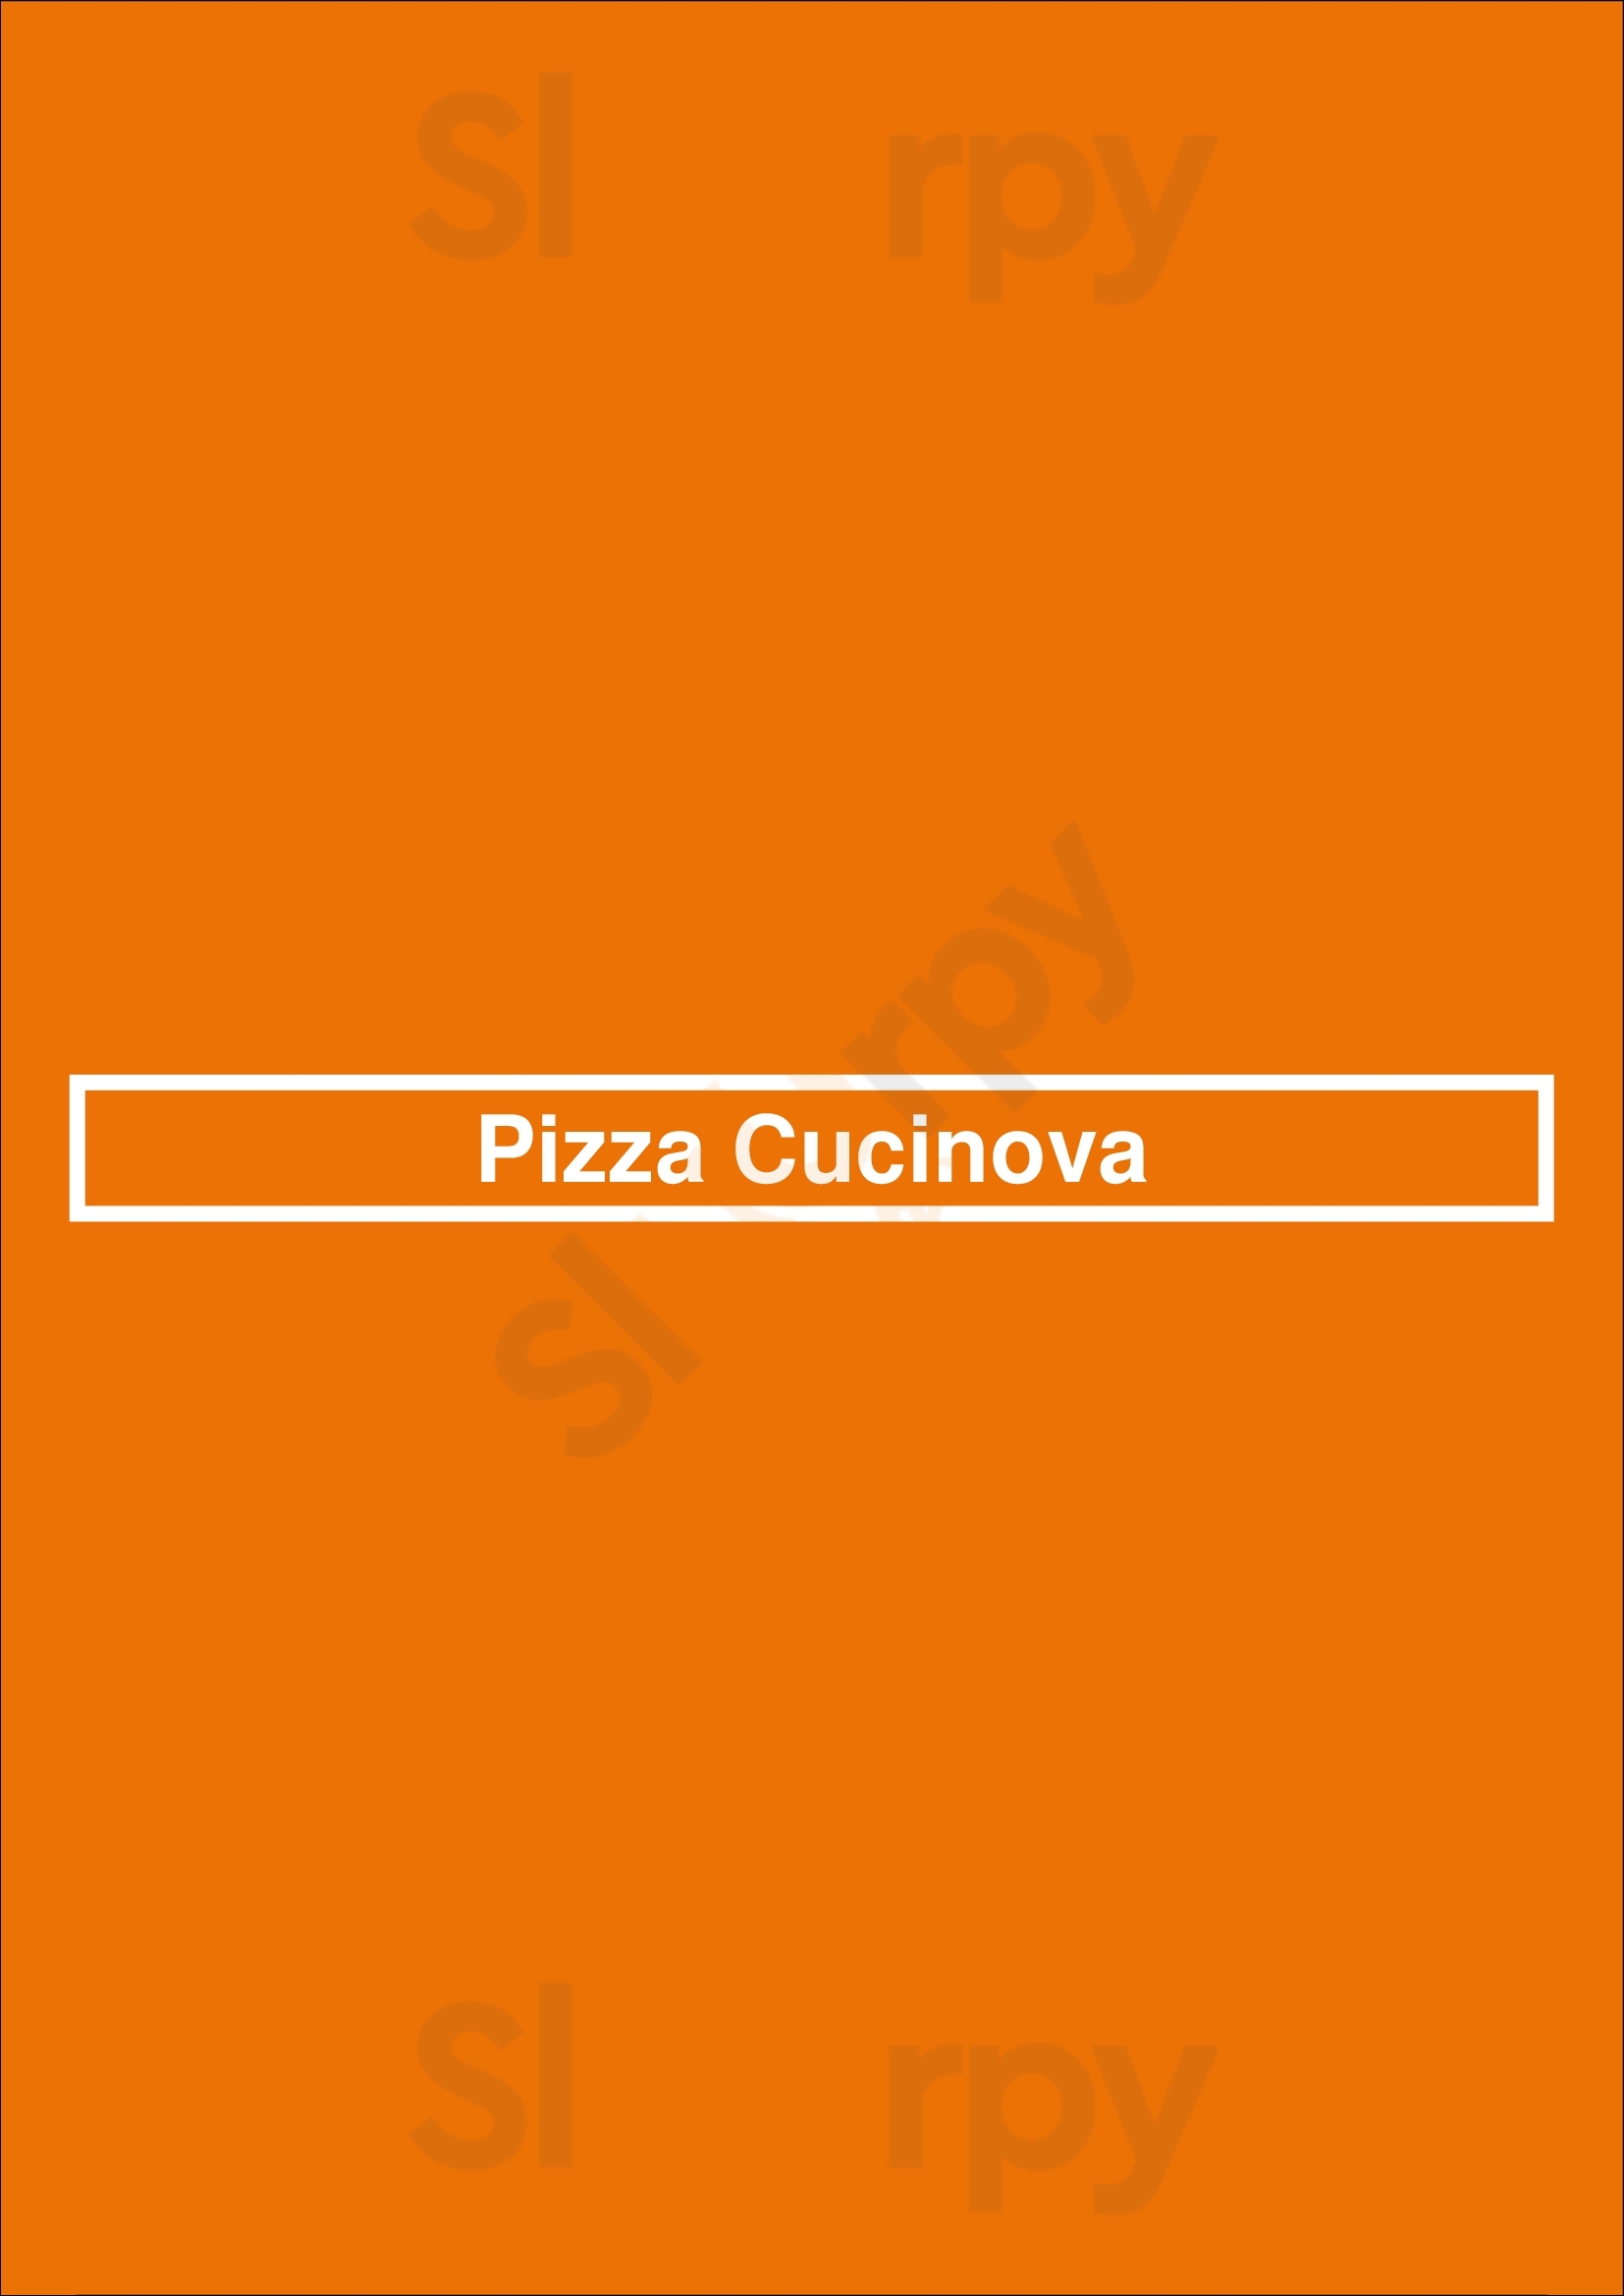 Pizza Cucinova Columbus Menu - 1